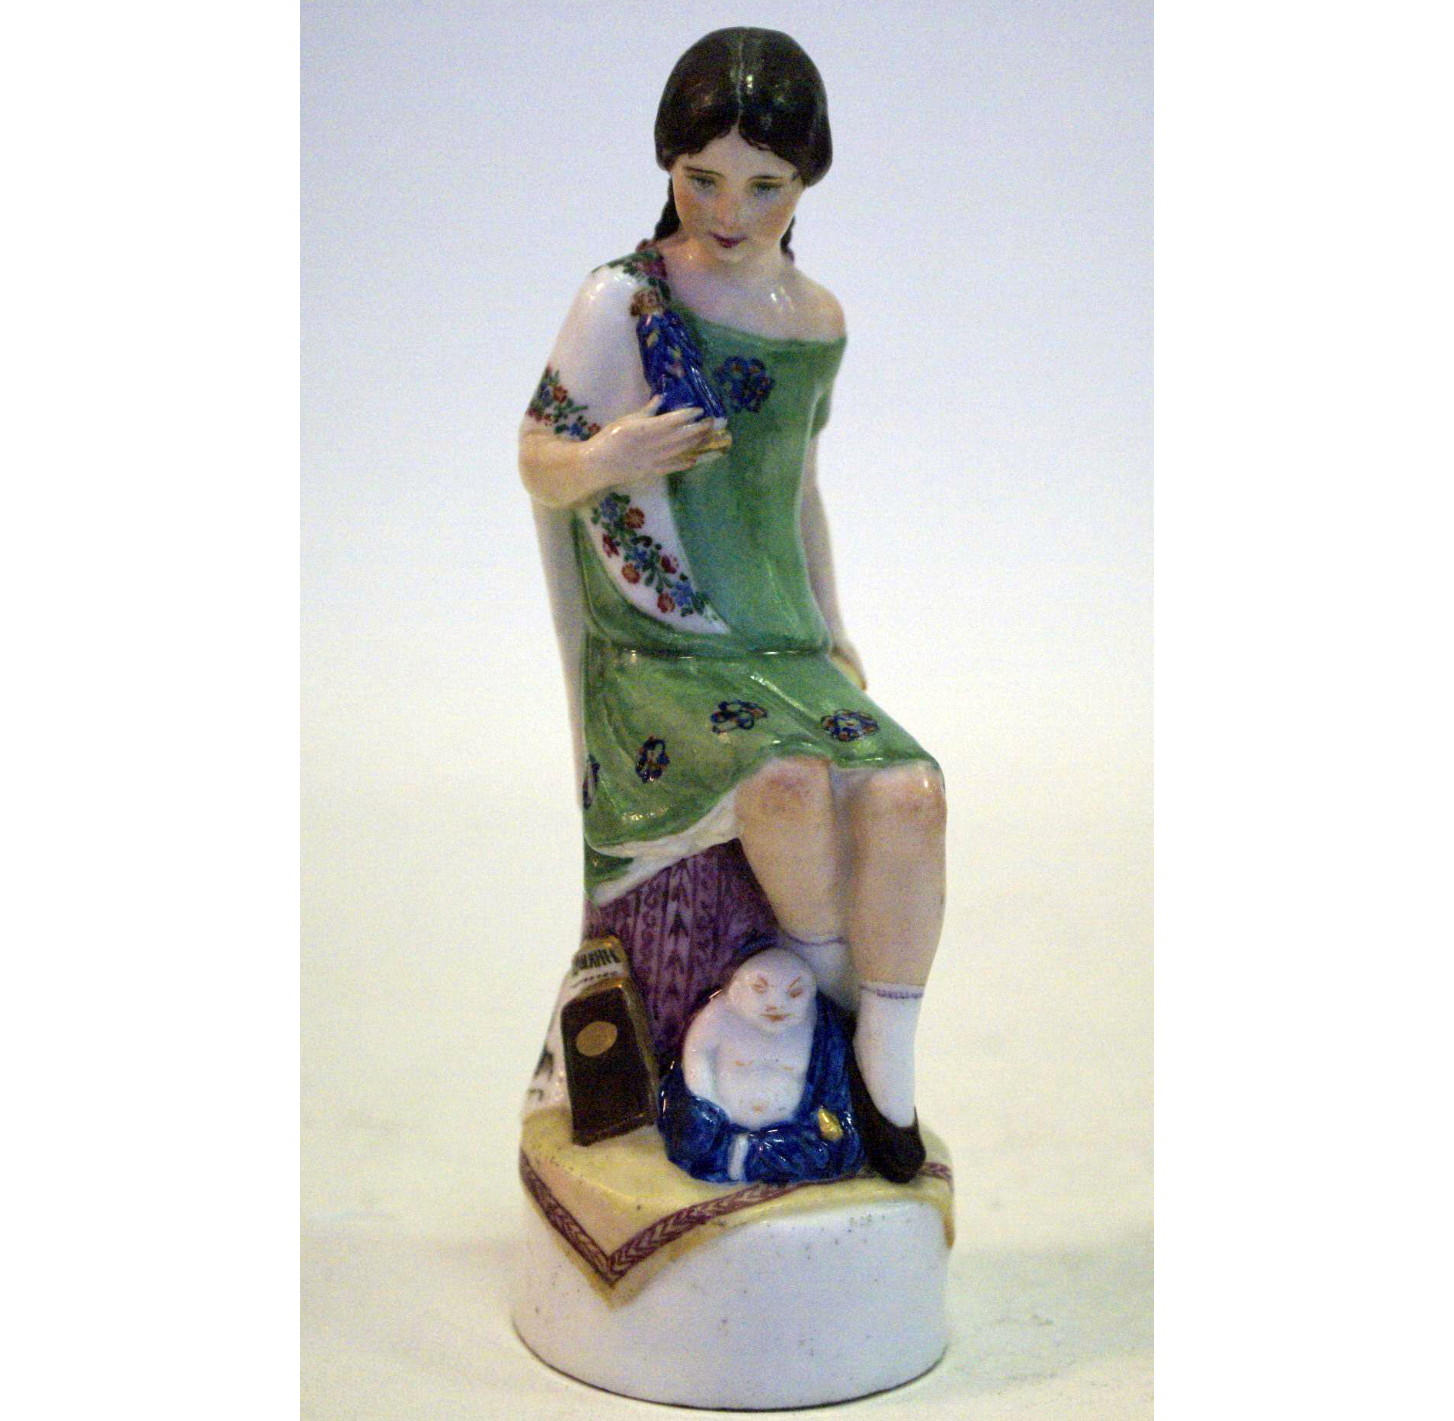 Soviet porcelain figure "Girl with presents" Danko